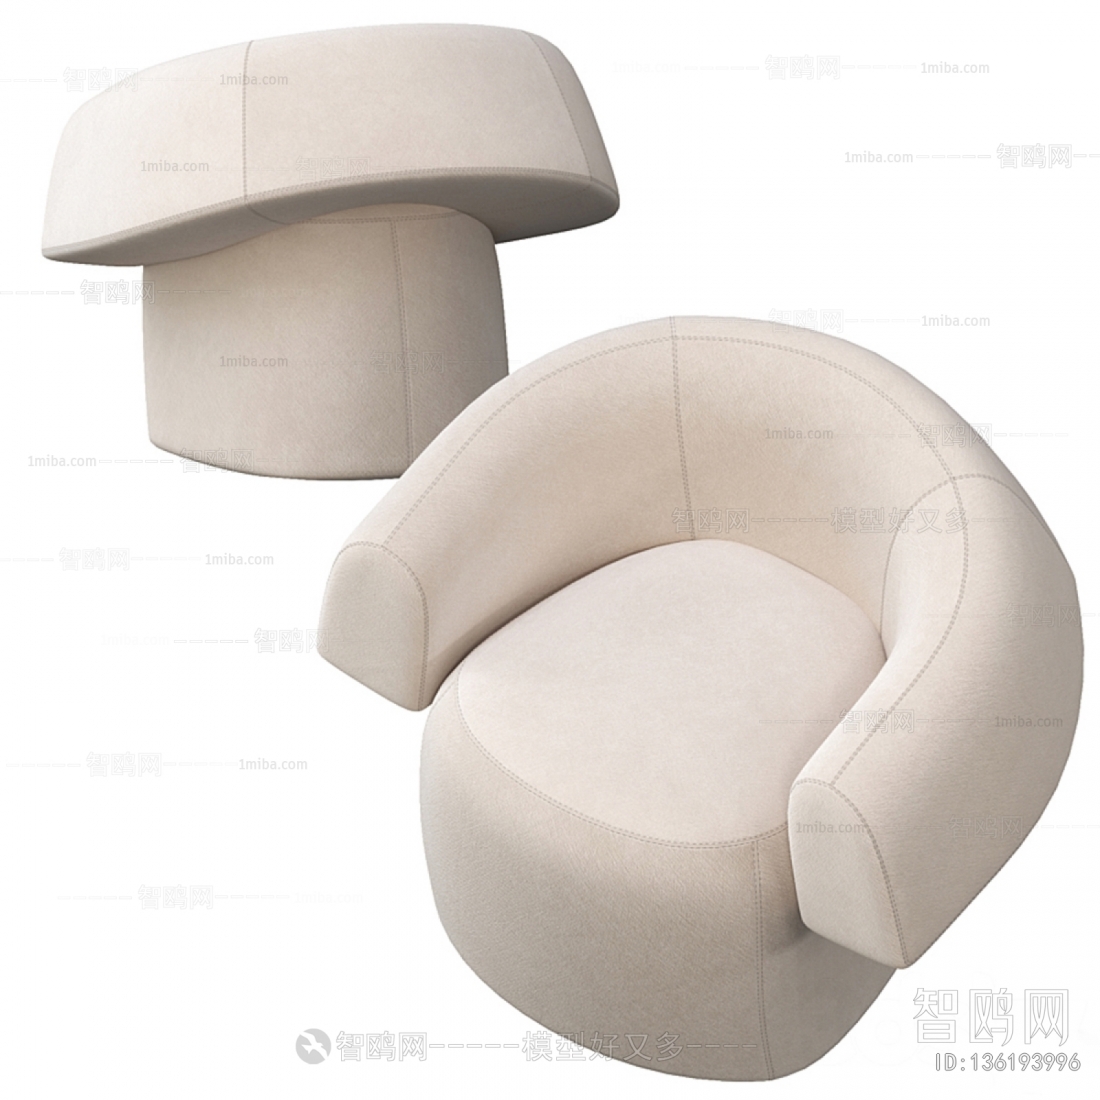 Modern Wabi-sabi Style Single Sofa